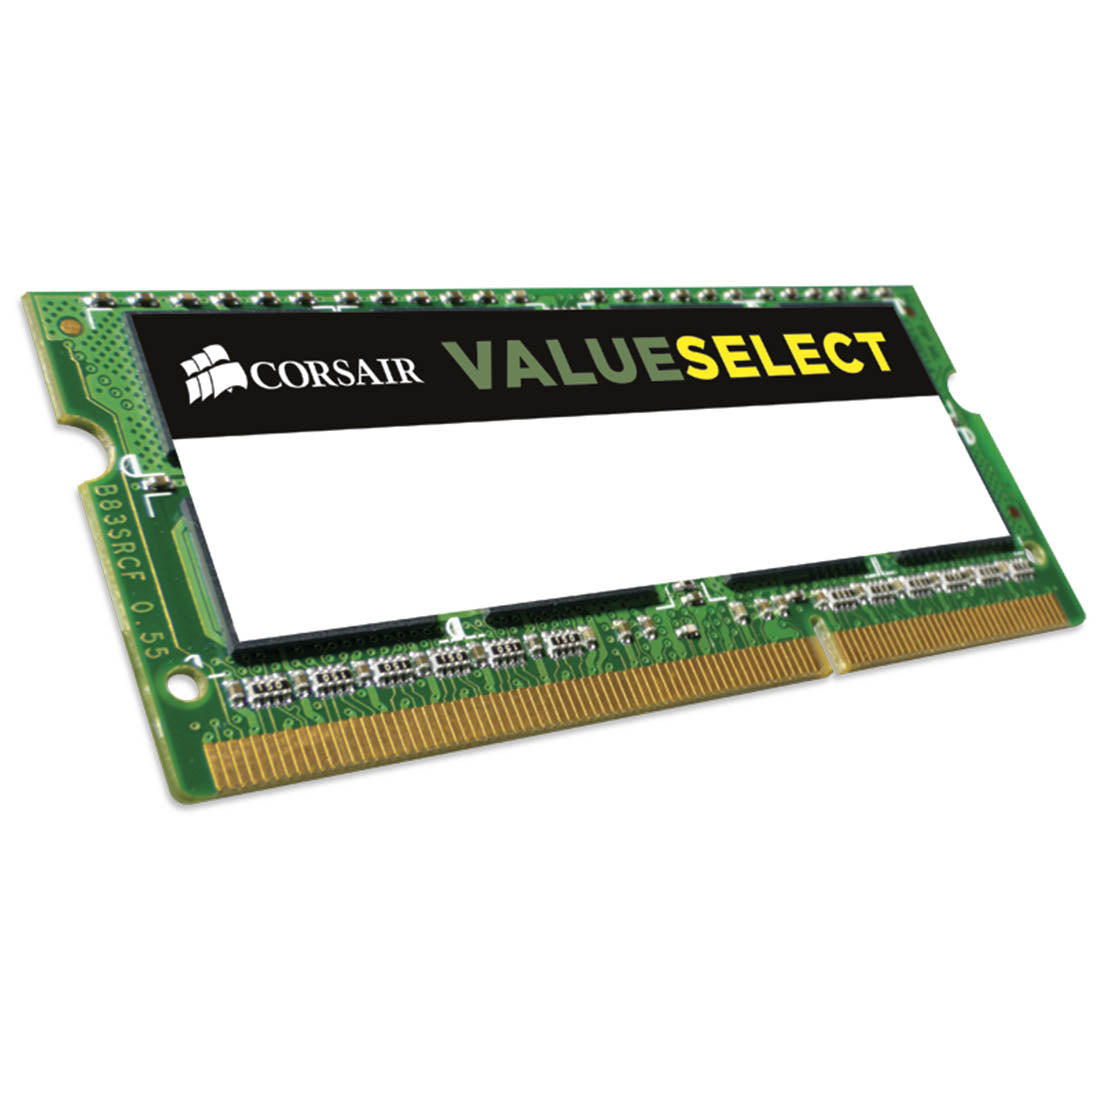 Corsair RAM 8GB DDR3L RAM 1600MHz लैपटॉप मेमोरी